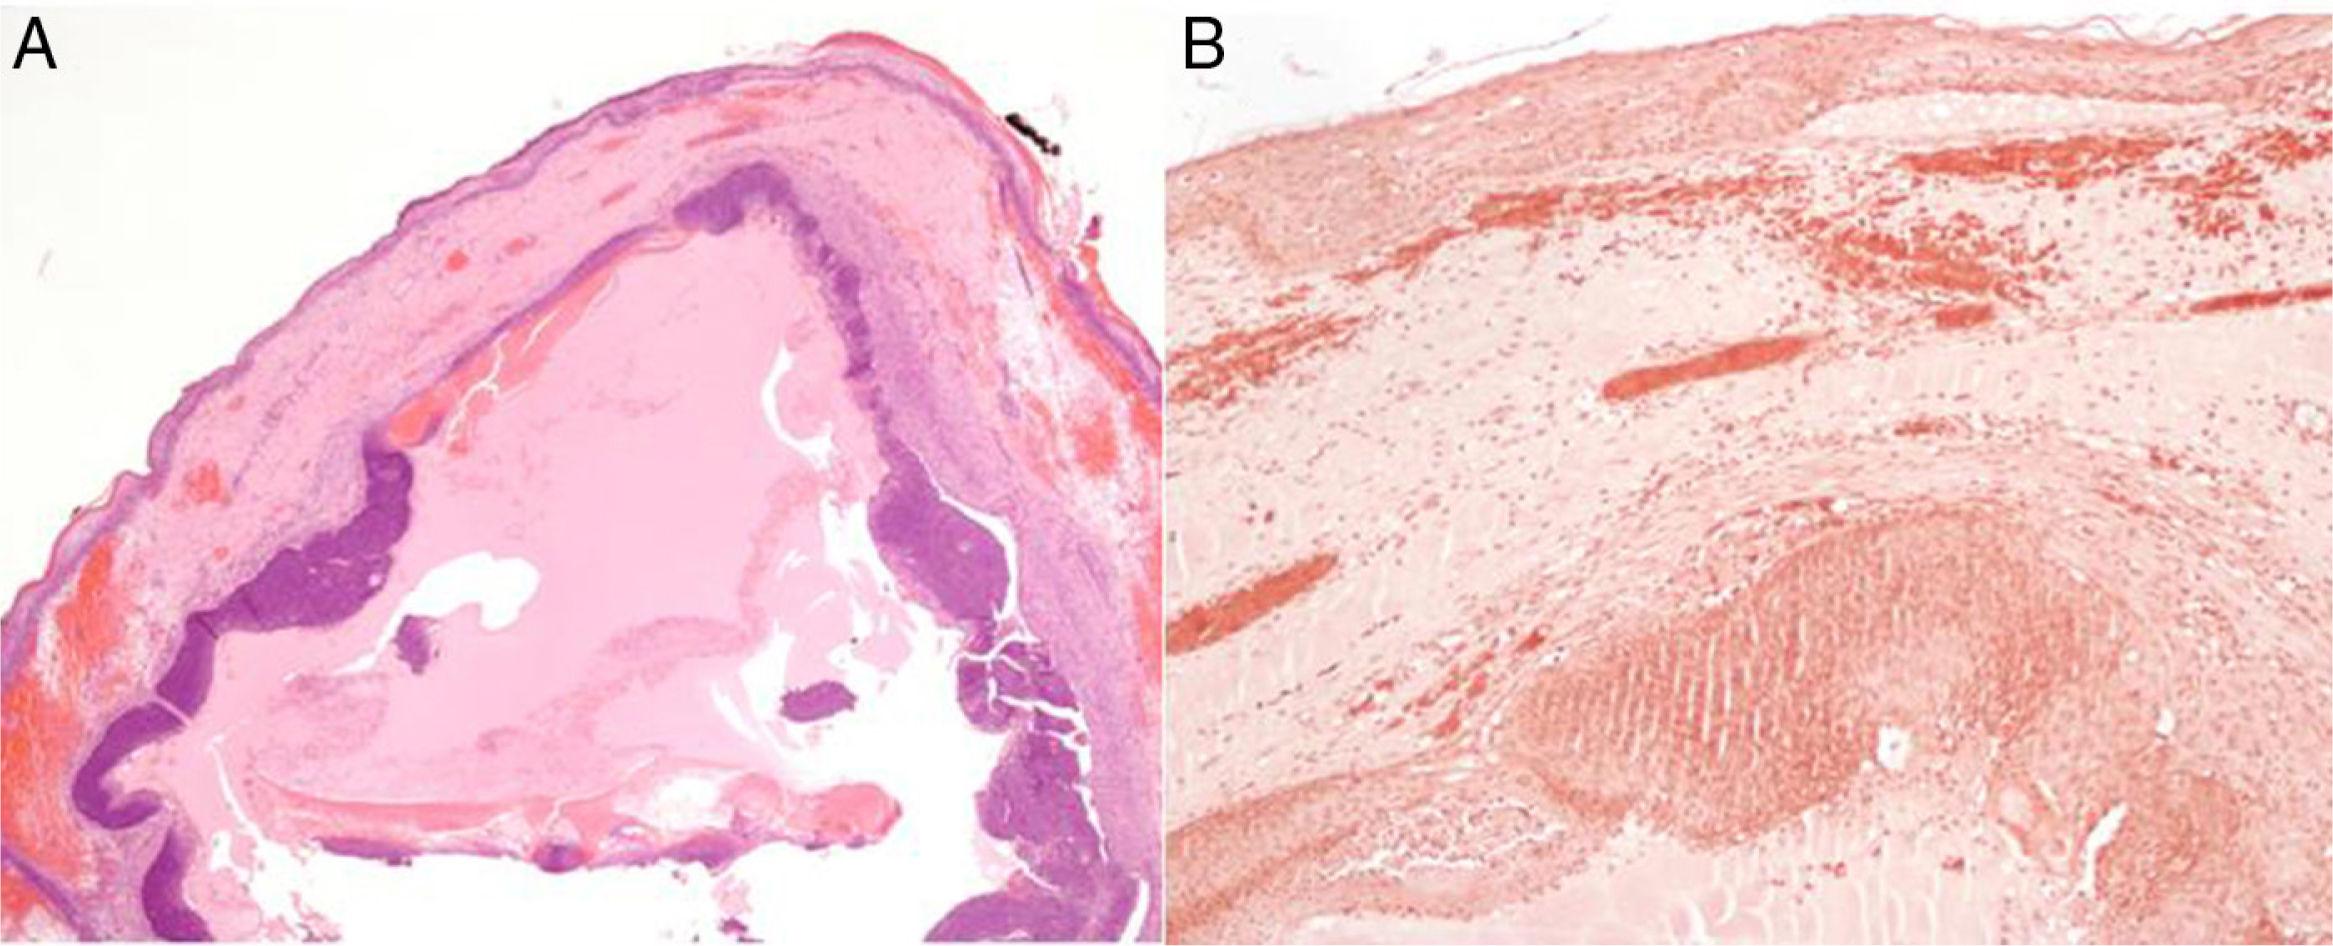 A Tumor In Images Anetodermic Pilomatrixoma Actas Dermo Sifiliográficas